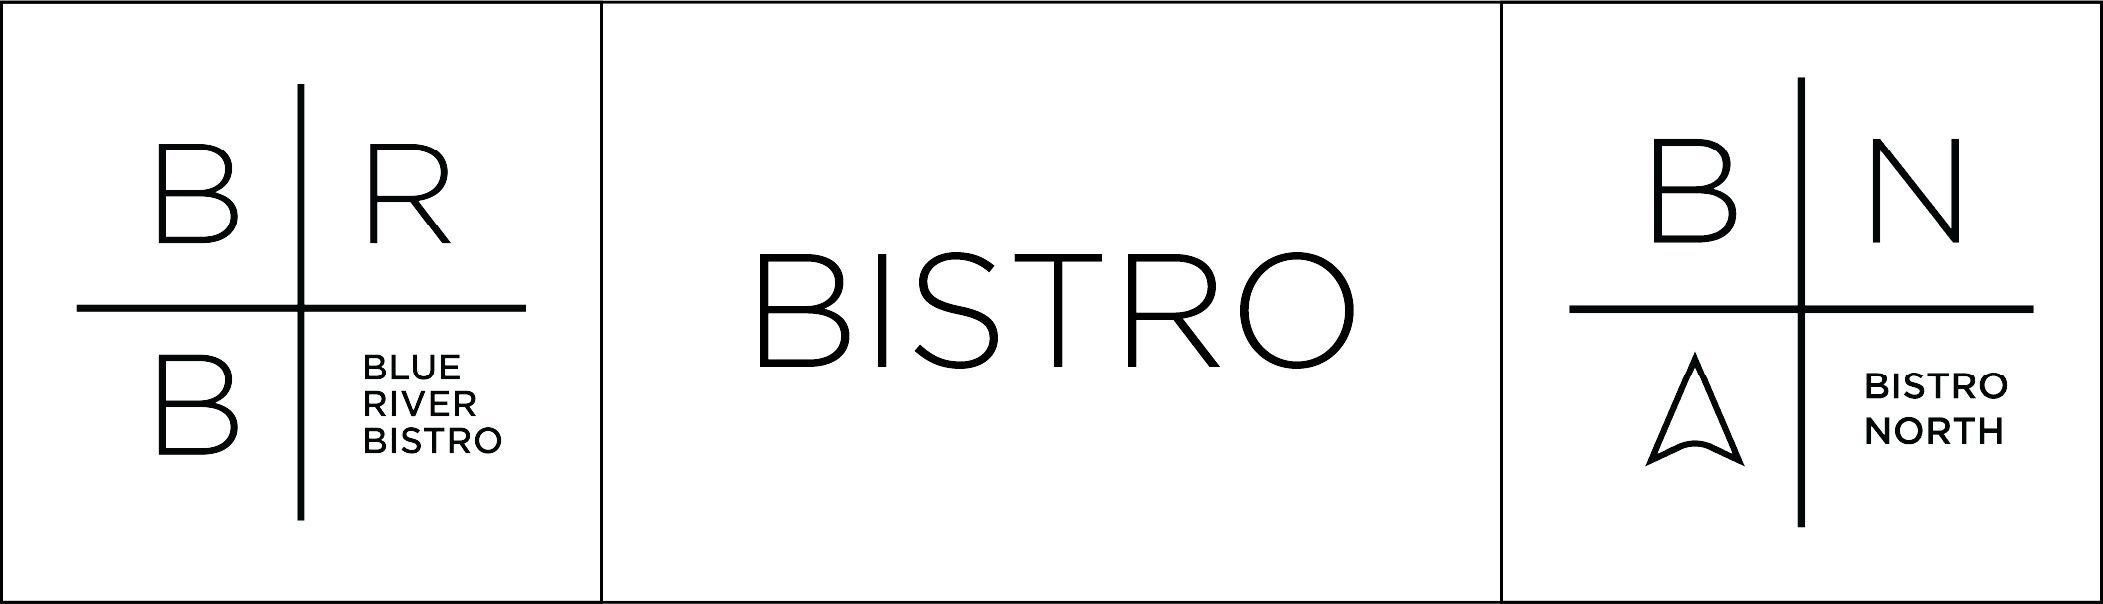 Blue River Bistro and Bistro North Logo